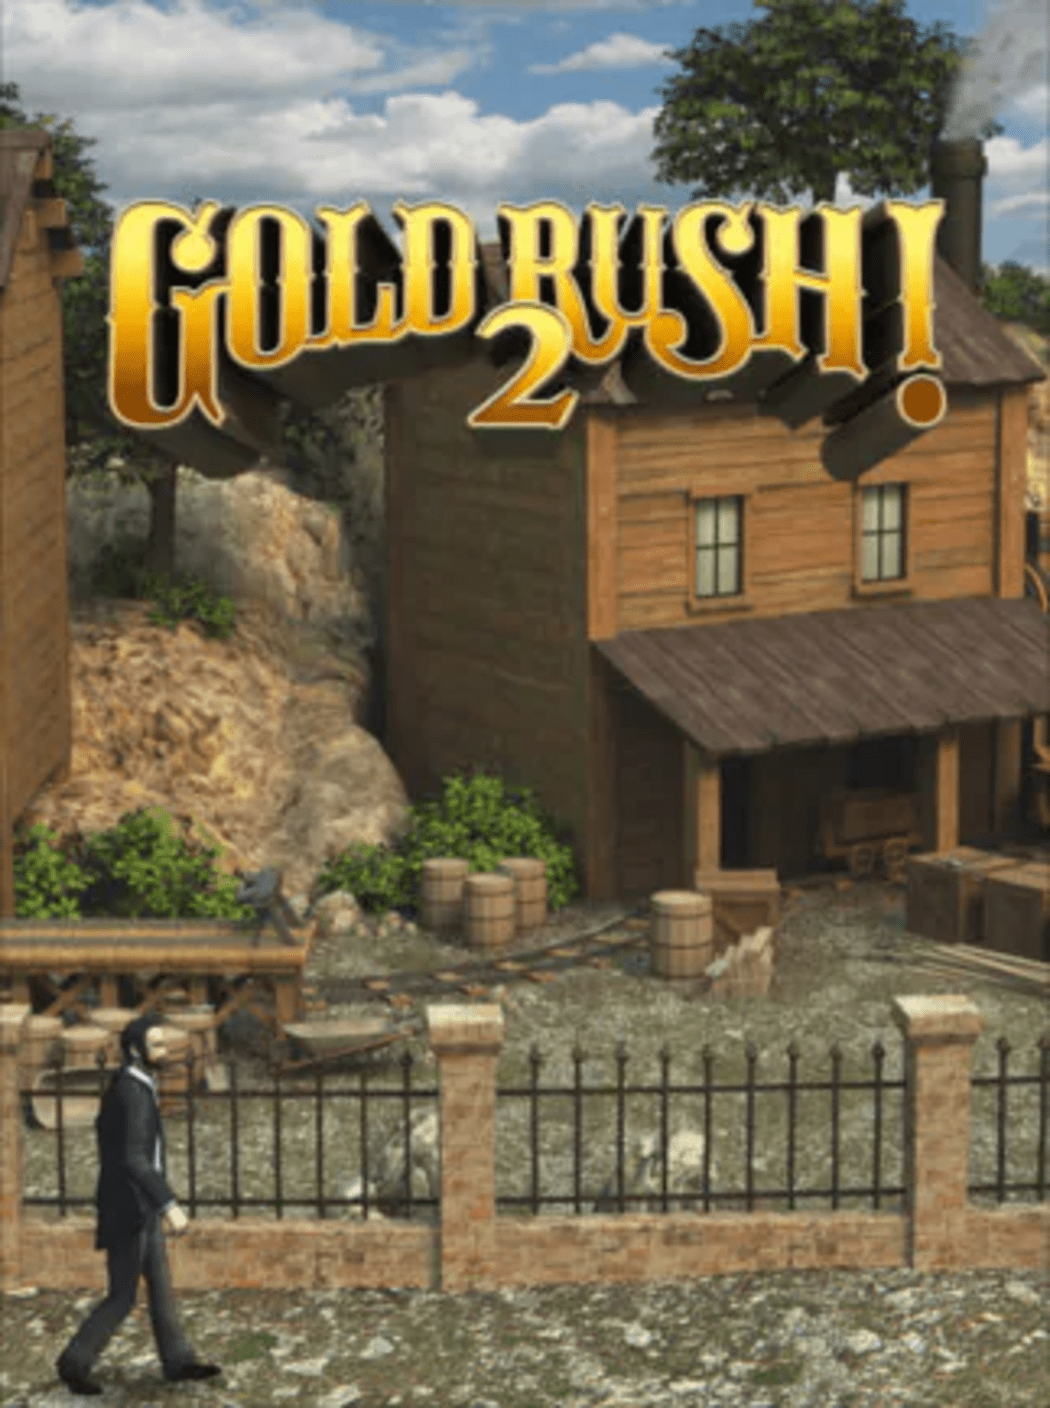 Comunidade Steam :: Gold Rush: The Game